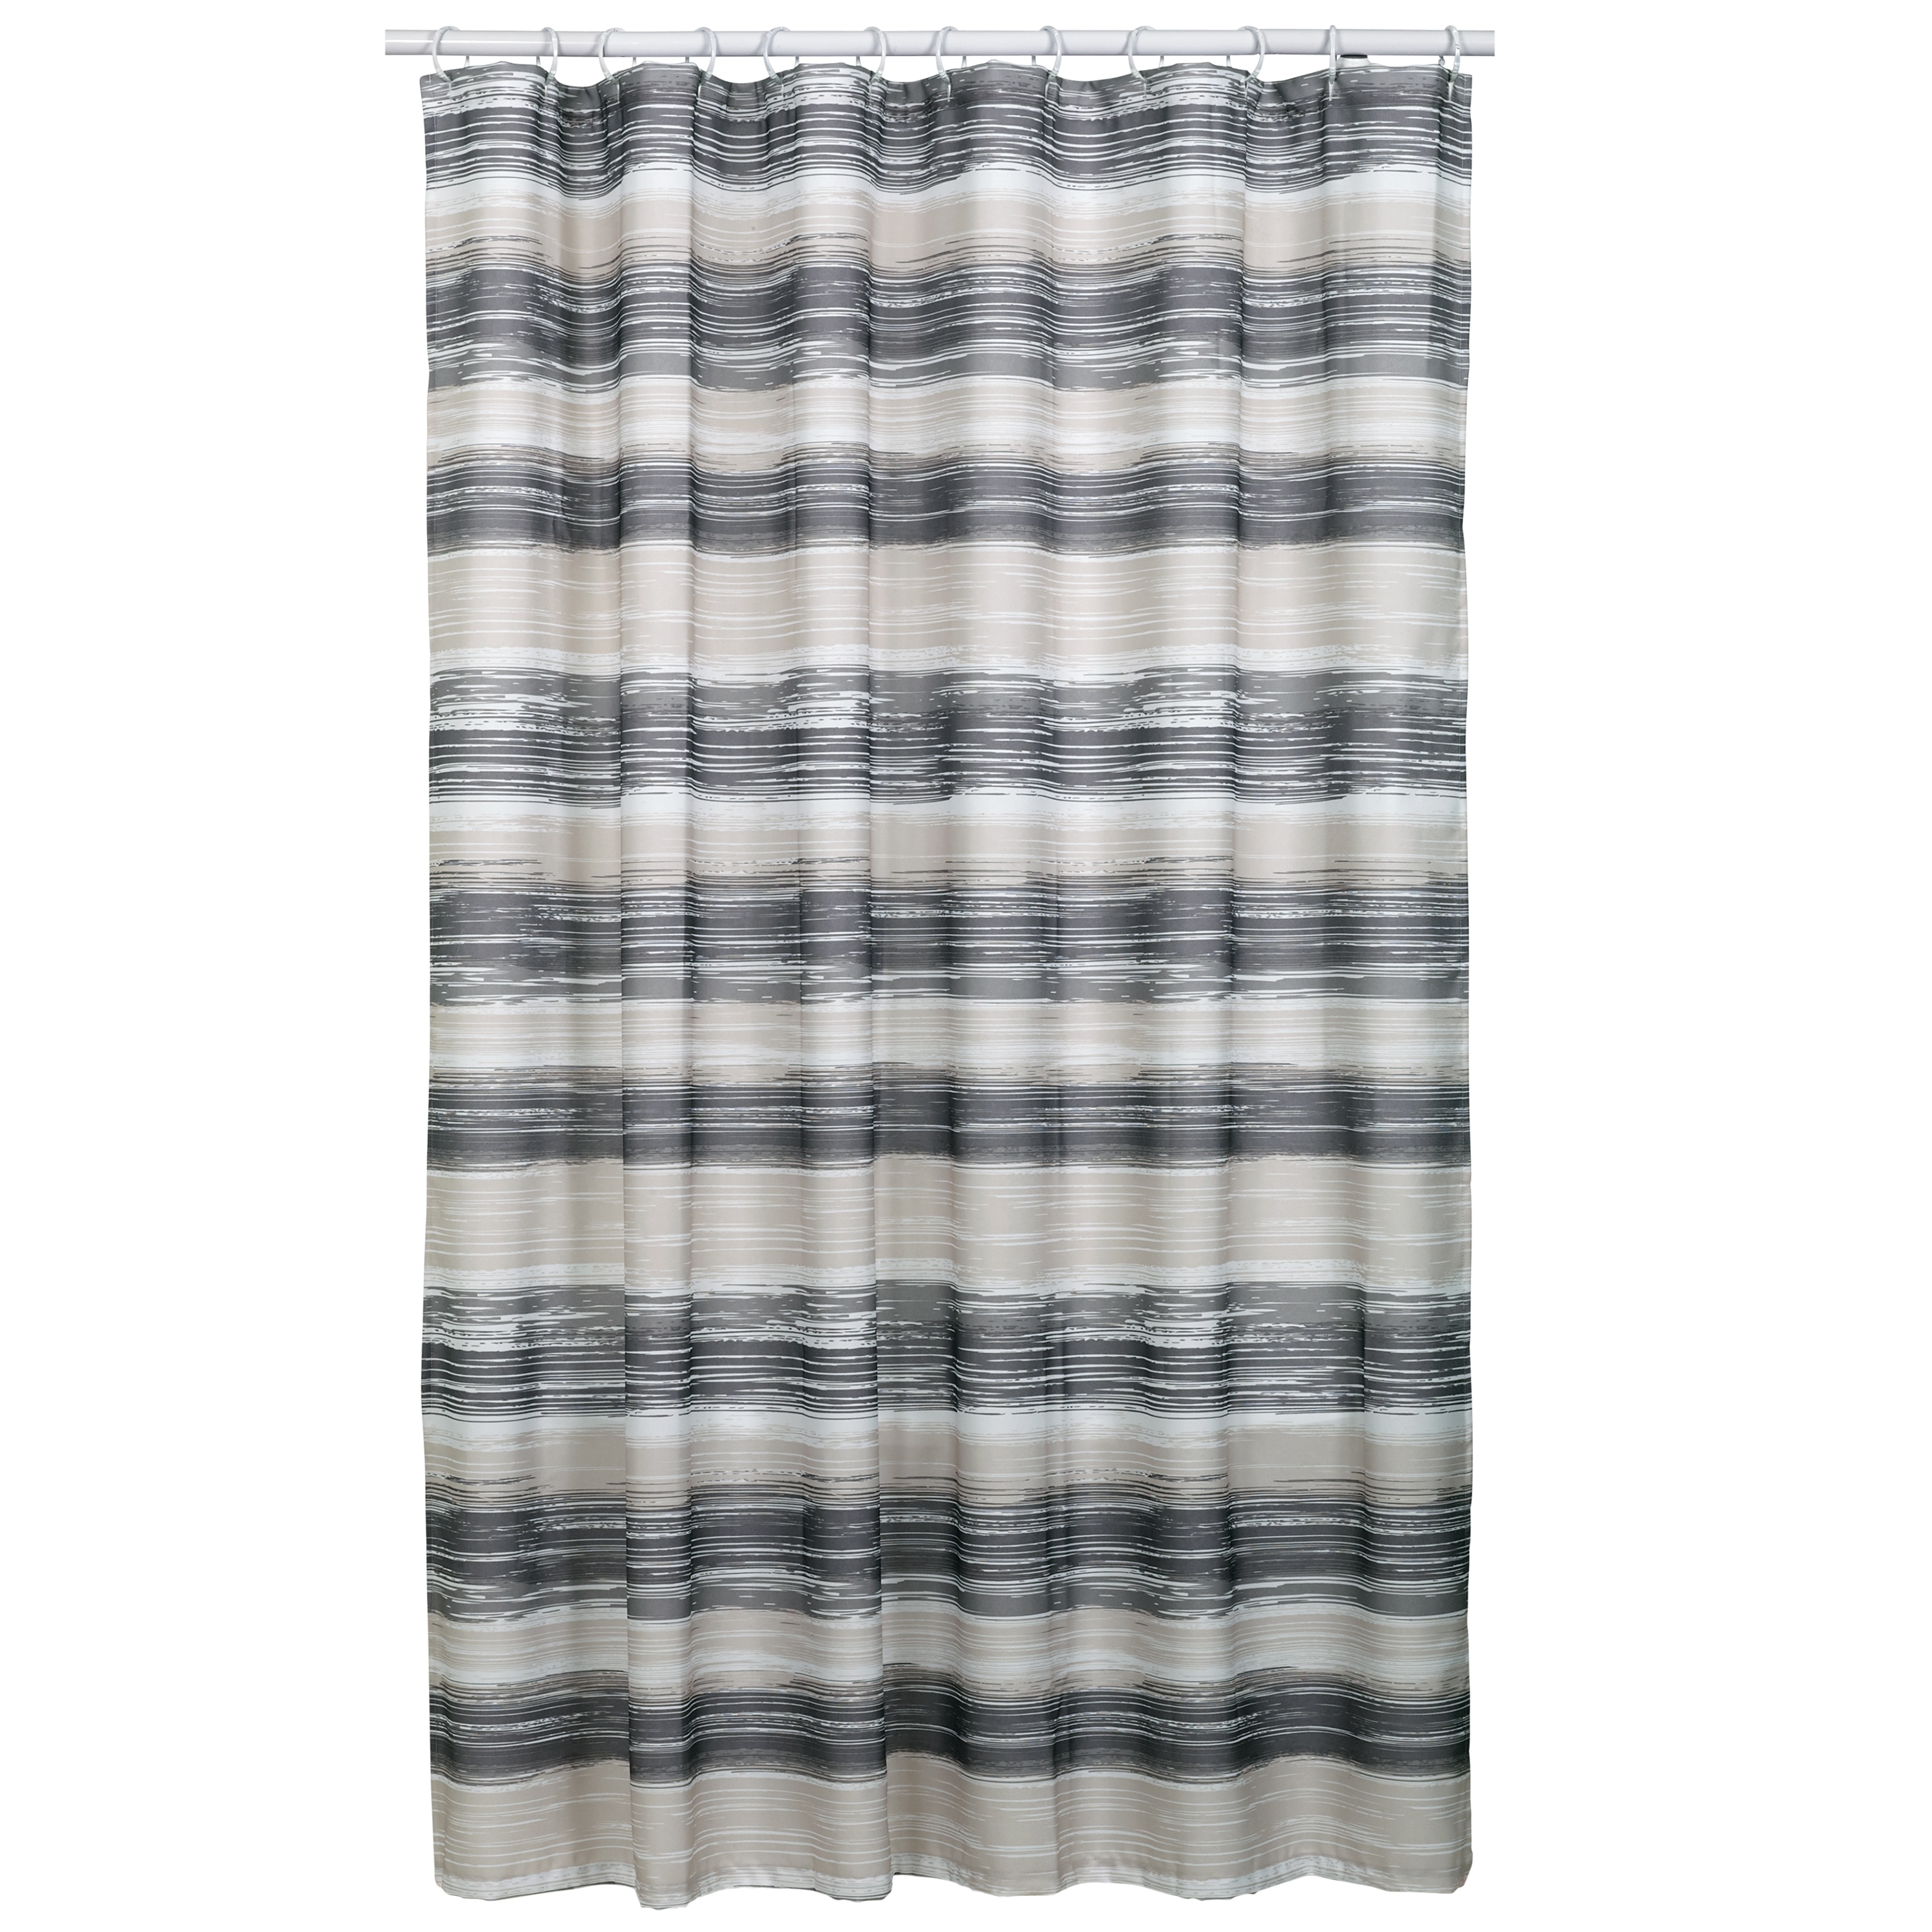 Blake Brown/Tan Fabric Shower Curtain 70 x 72 Brand New Zenna Home 